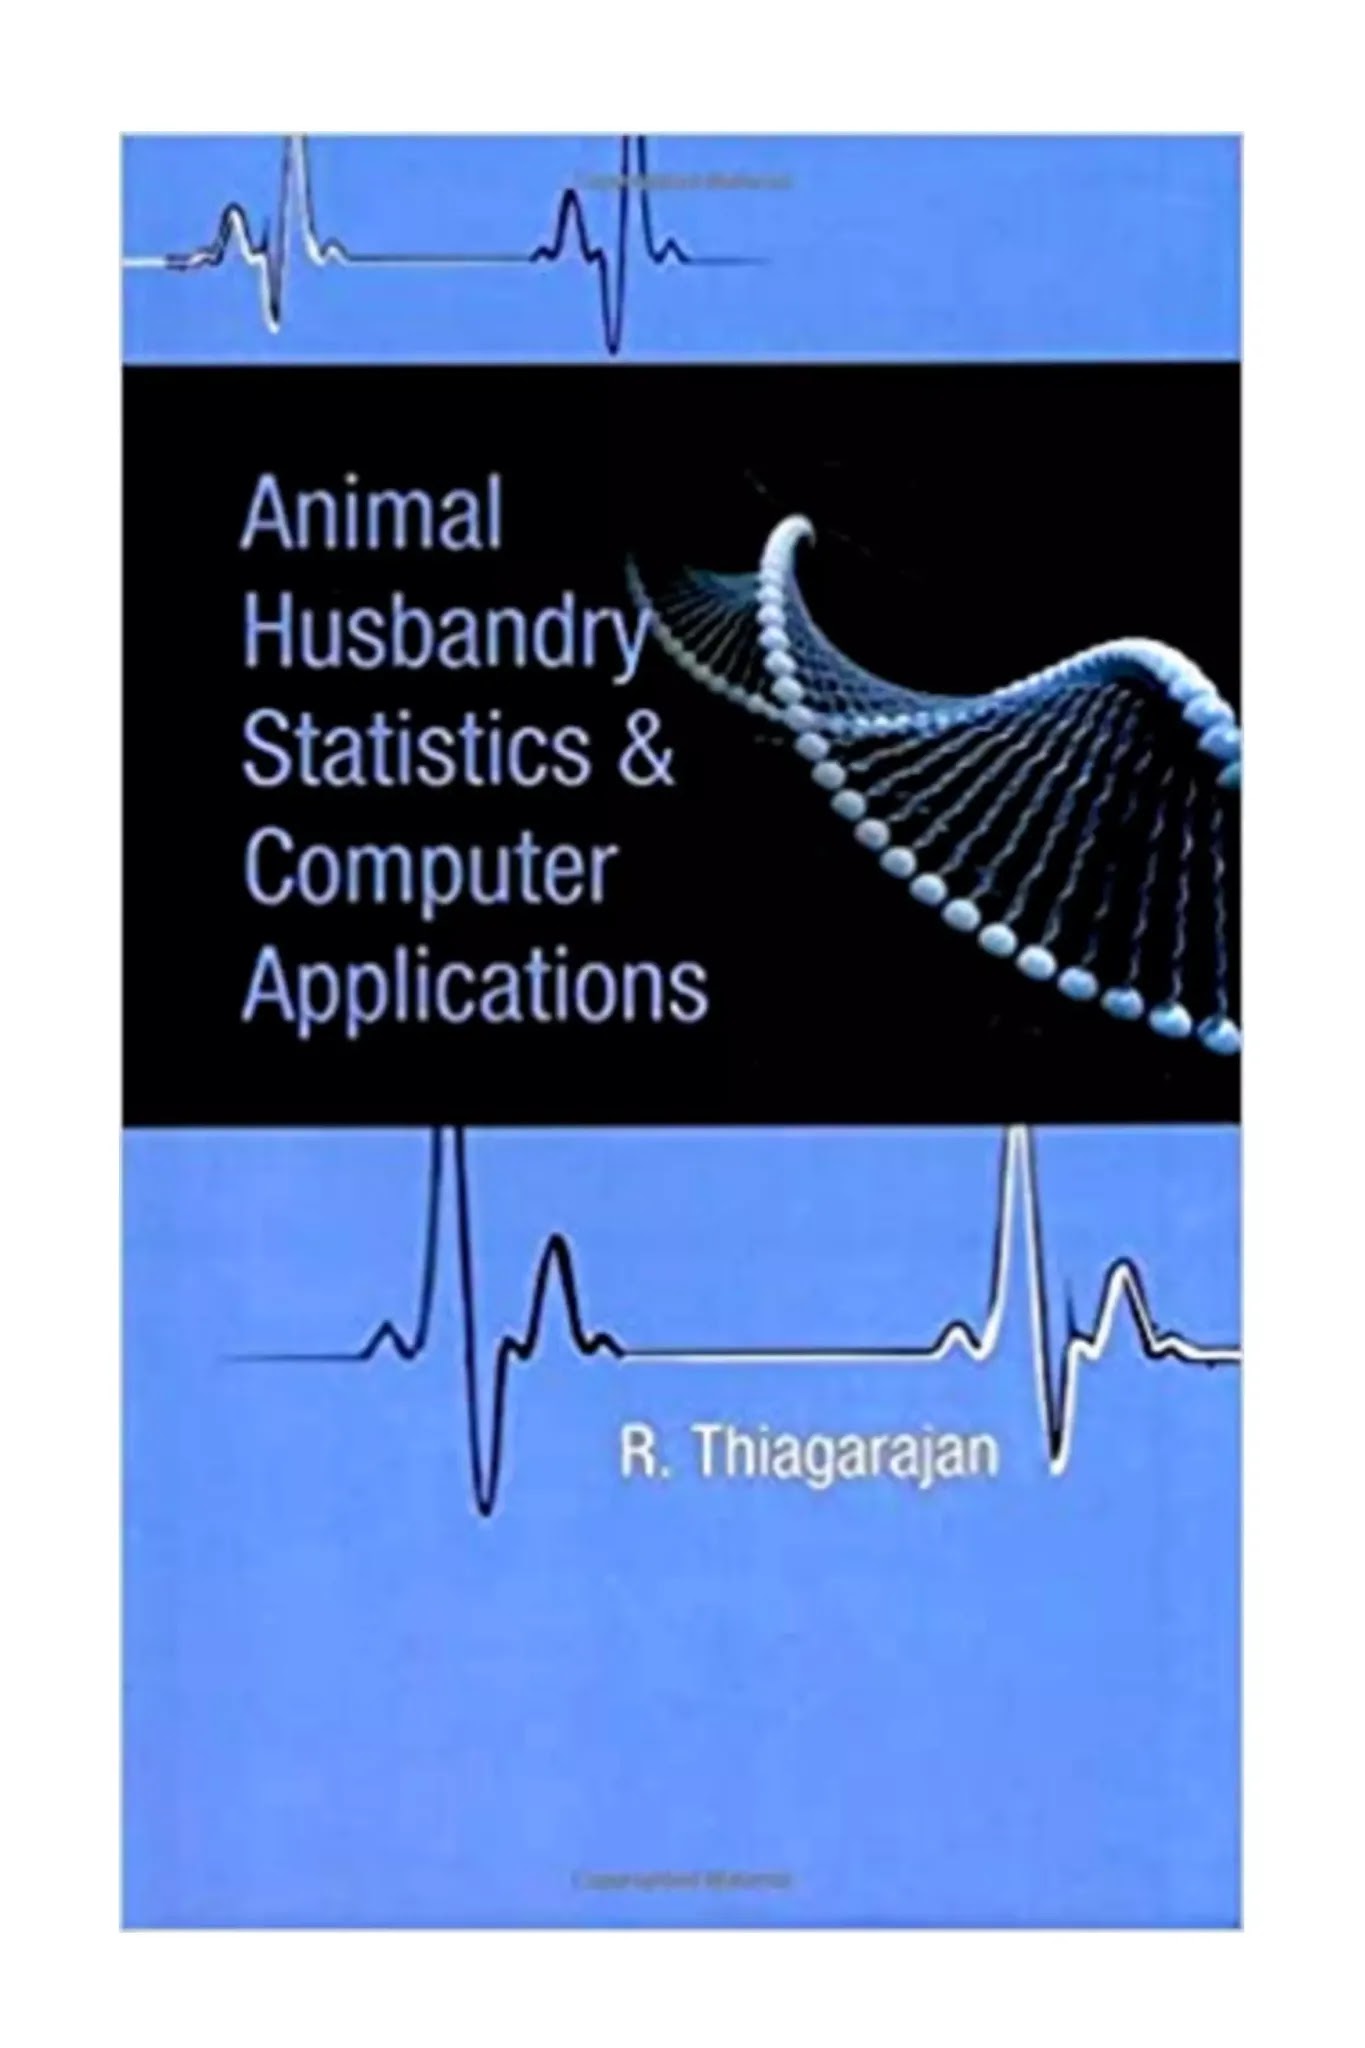 Animal Husbandry Statistics and Computer Applications by R Thiagarajan